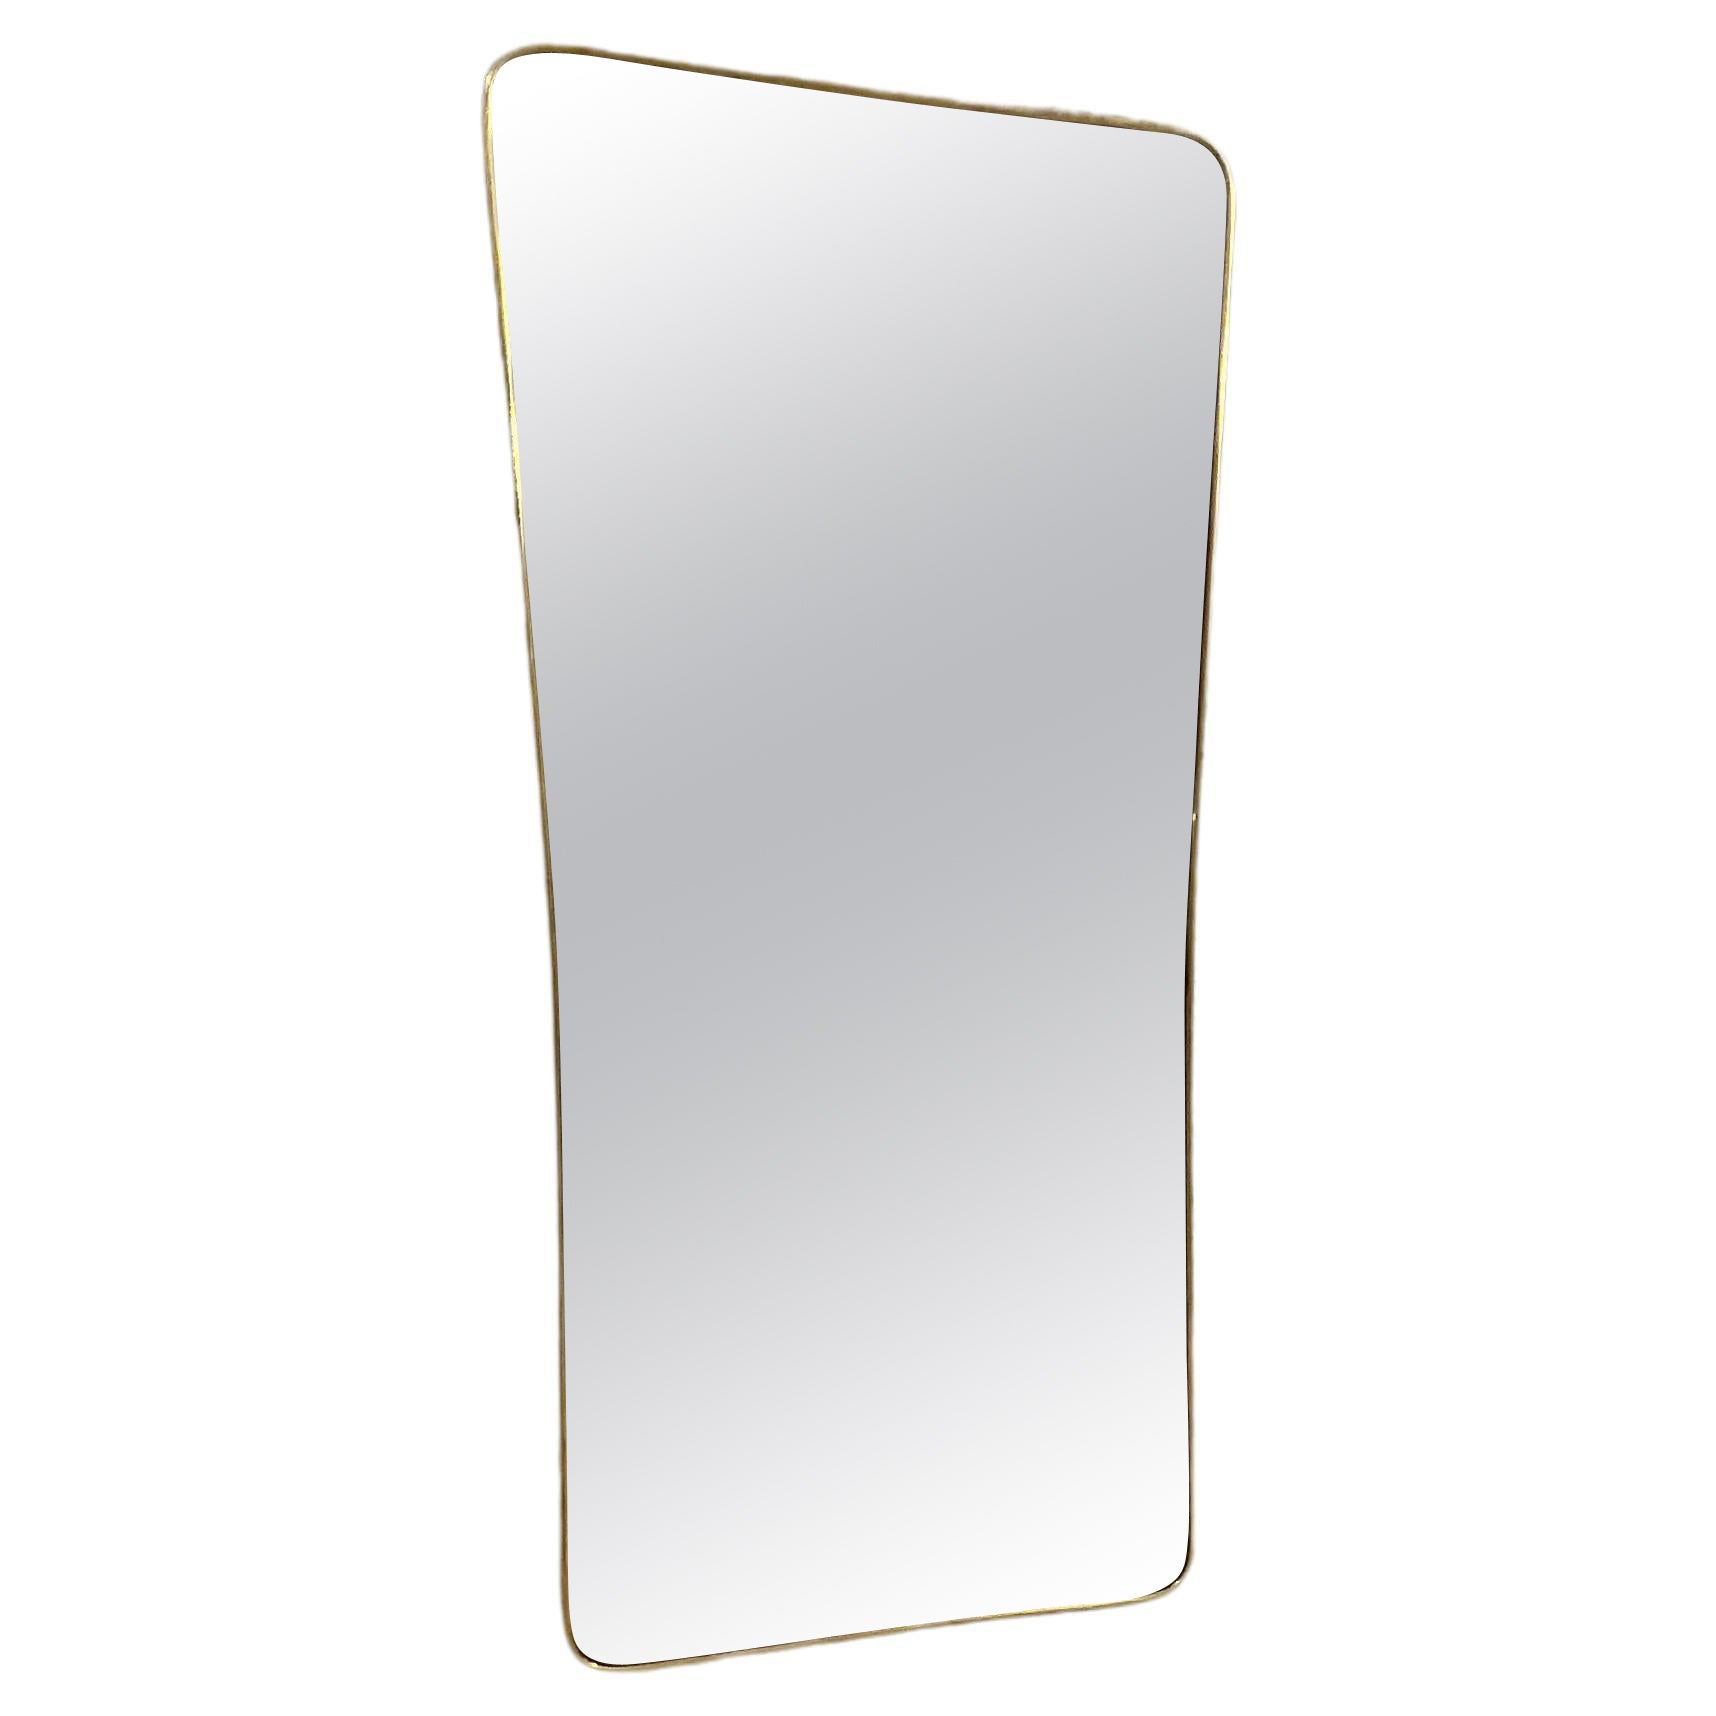 FONTANARTE - Pietro Chiesa - Brass frame mirror - 1950s